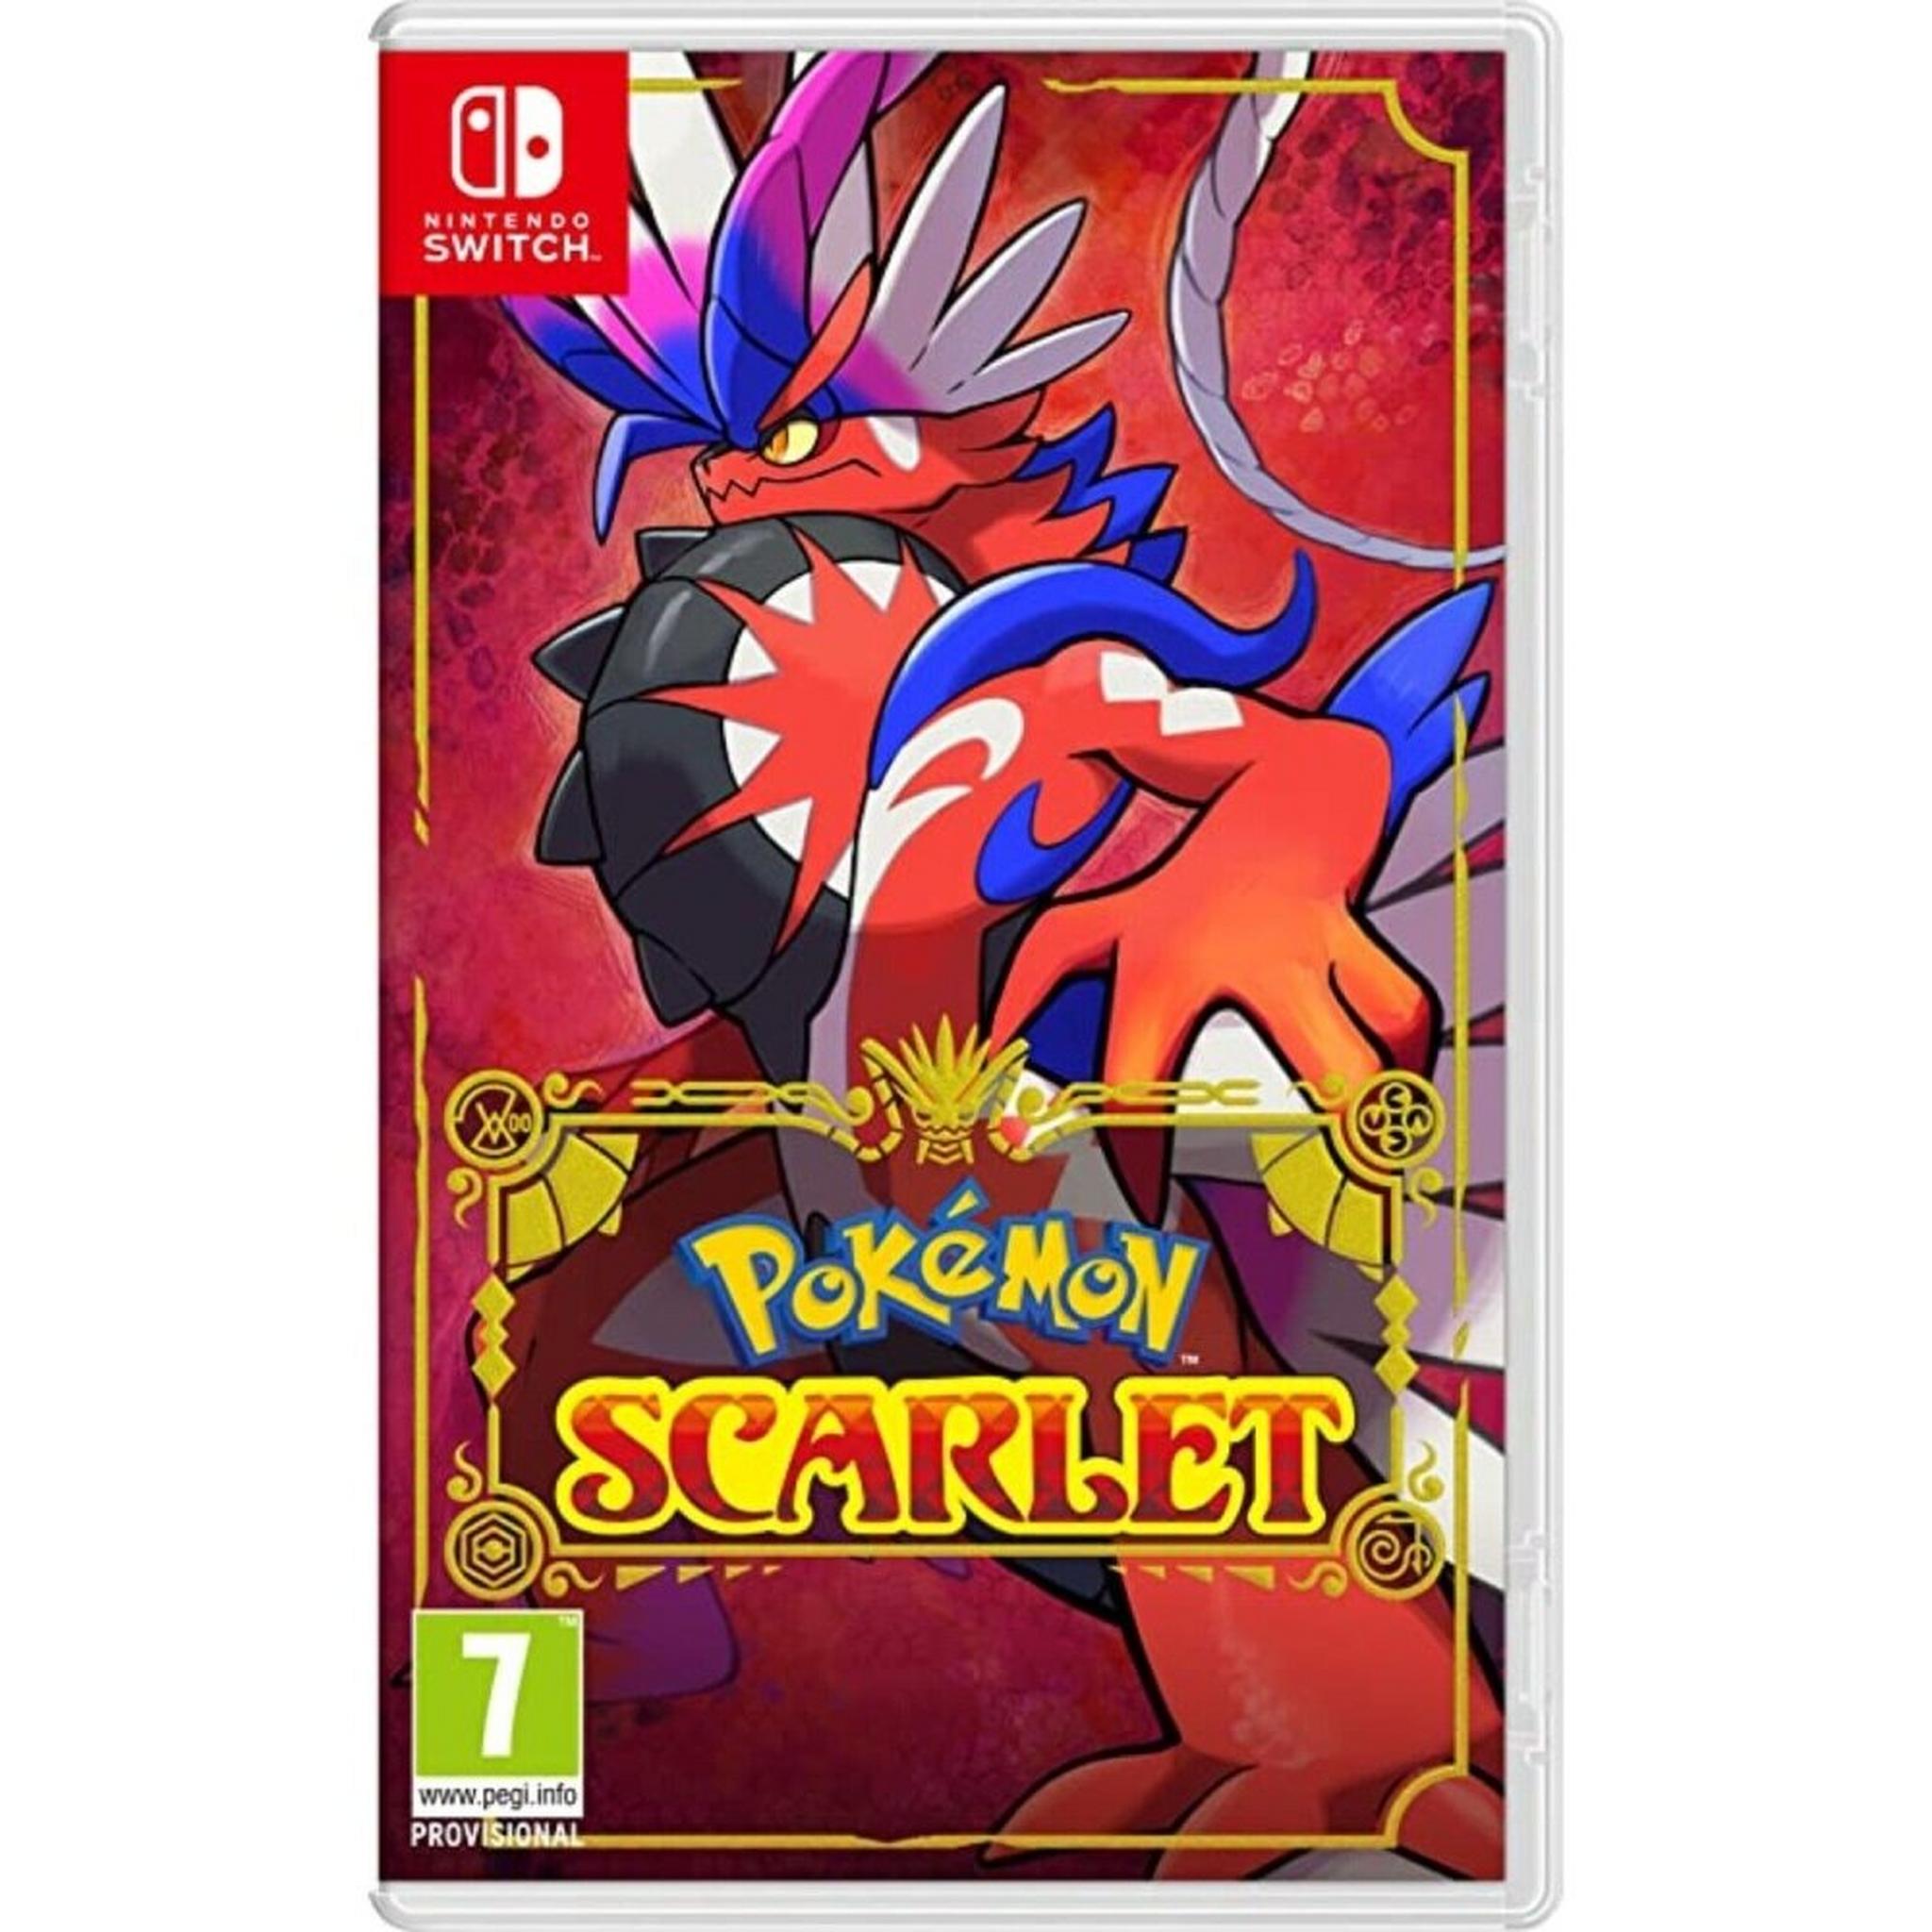 Pokémon Scarlet Game For Nintendo Switch, Nintendo Switch (OLED), Nintendo Switch Lite.